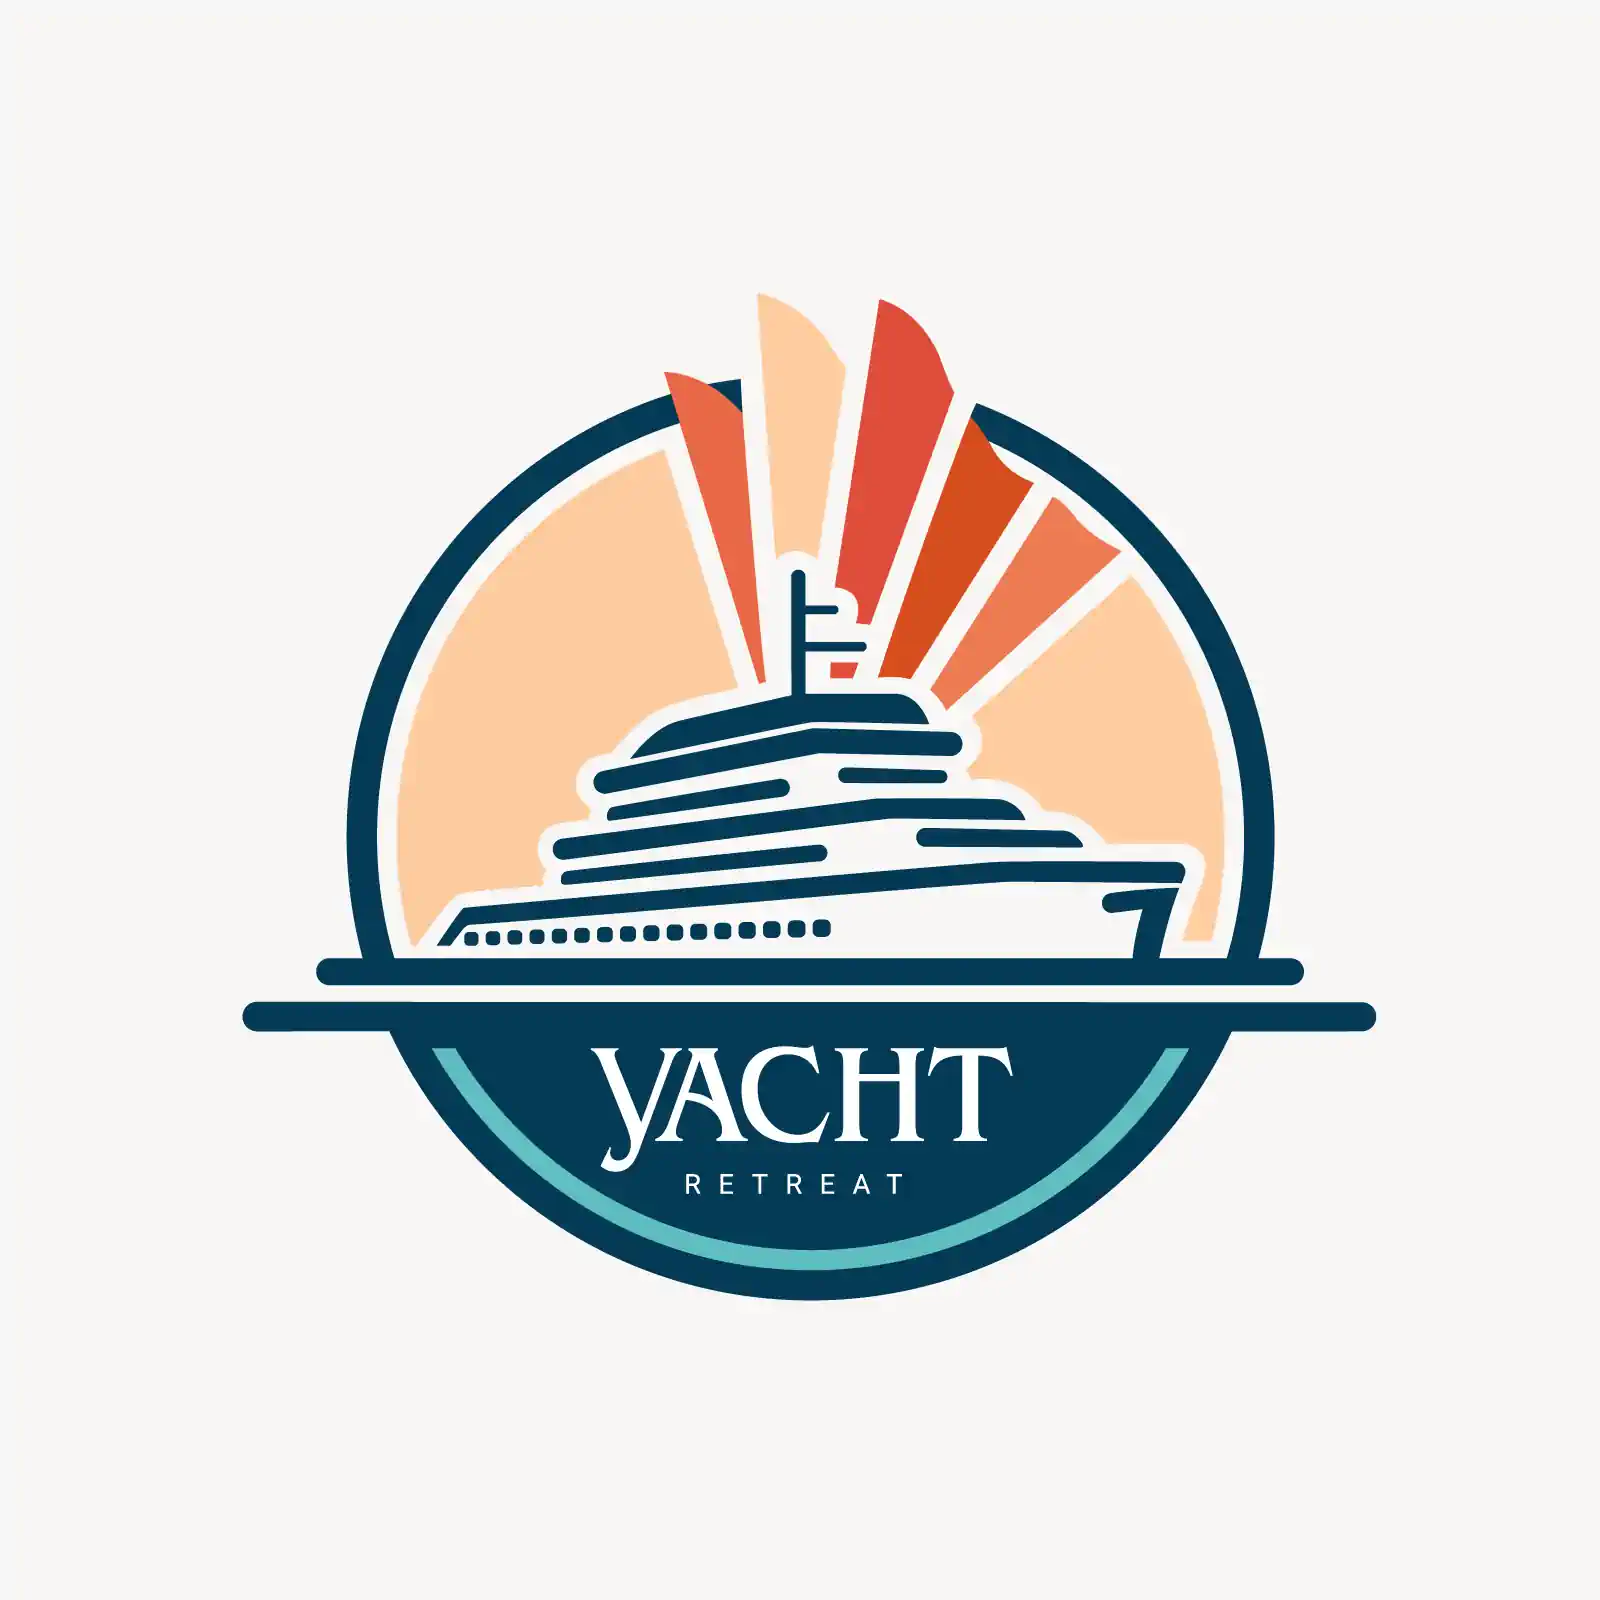 Yacht retreat logo